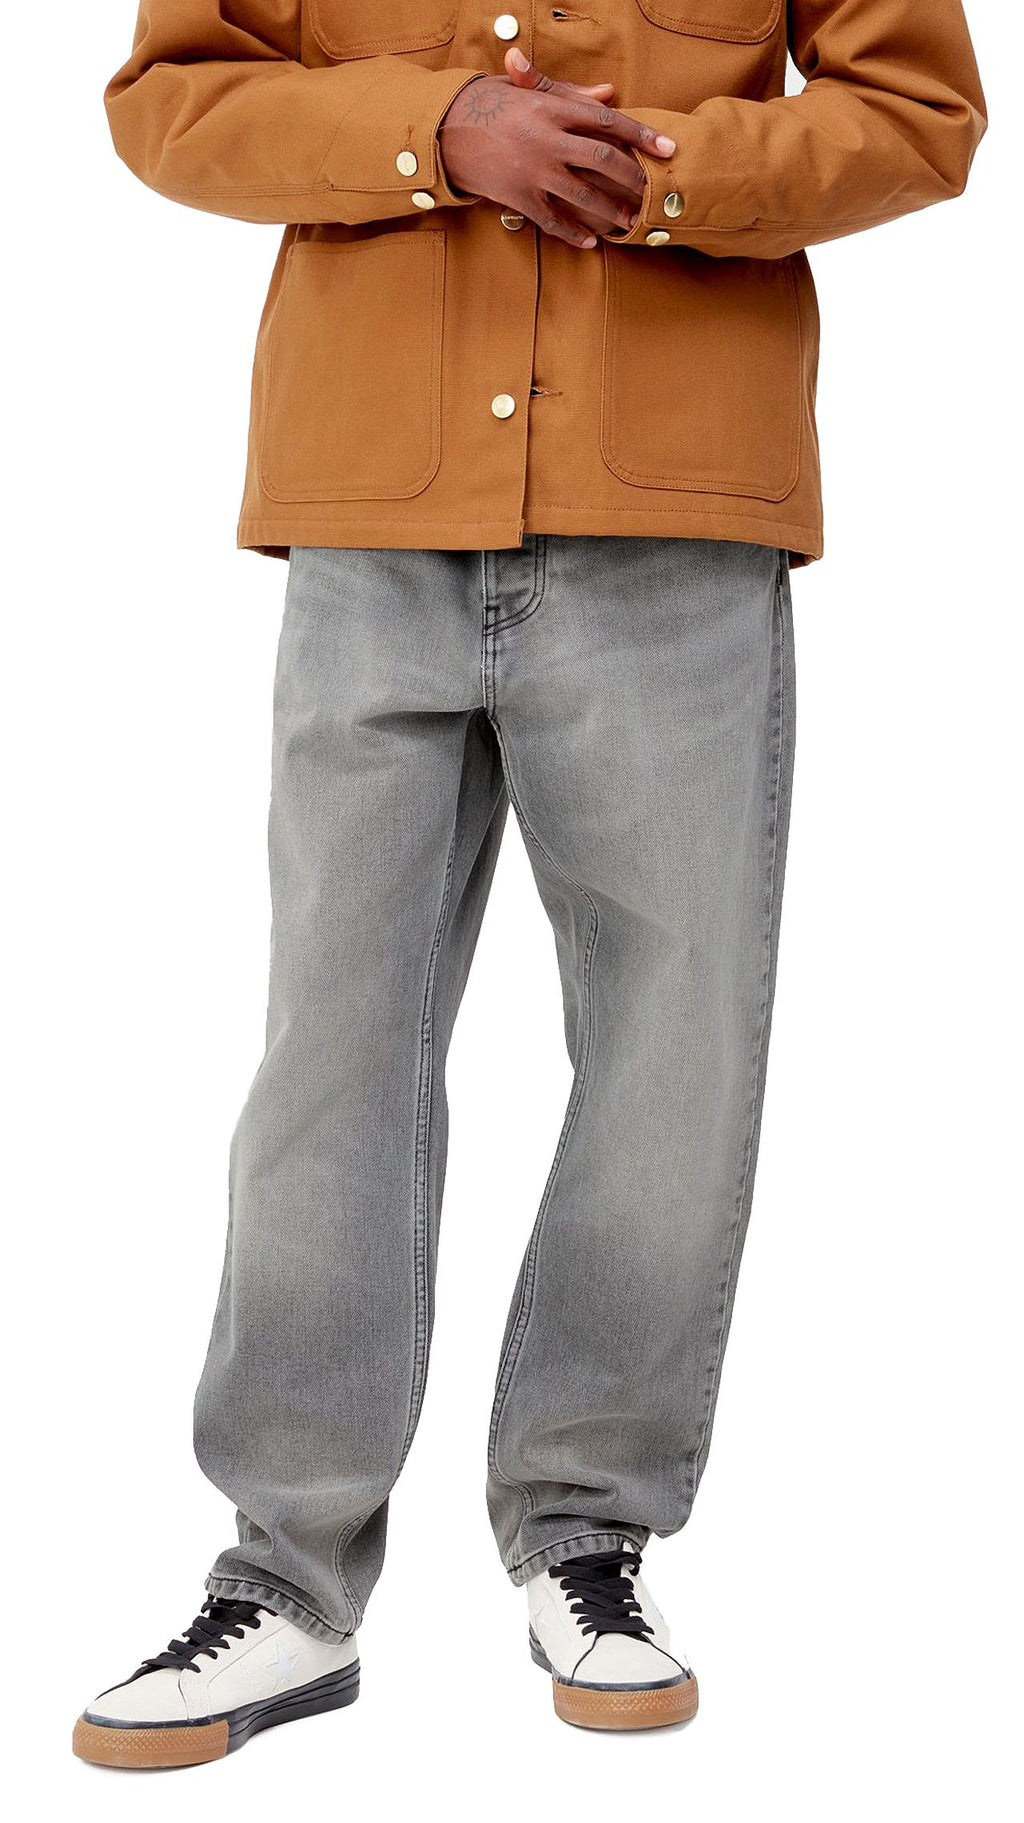  Carhartt Wip Jeans Newel Pant Black Light Used Wash Grigio Uomo - 2